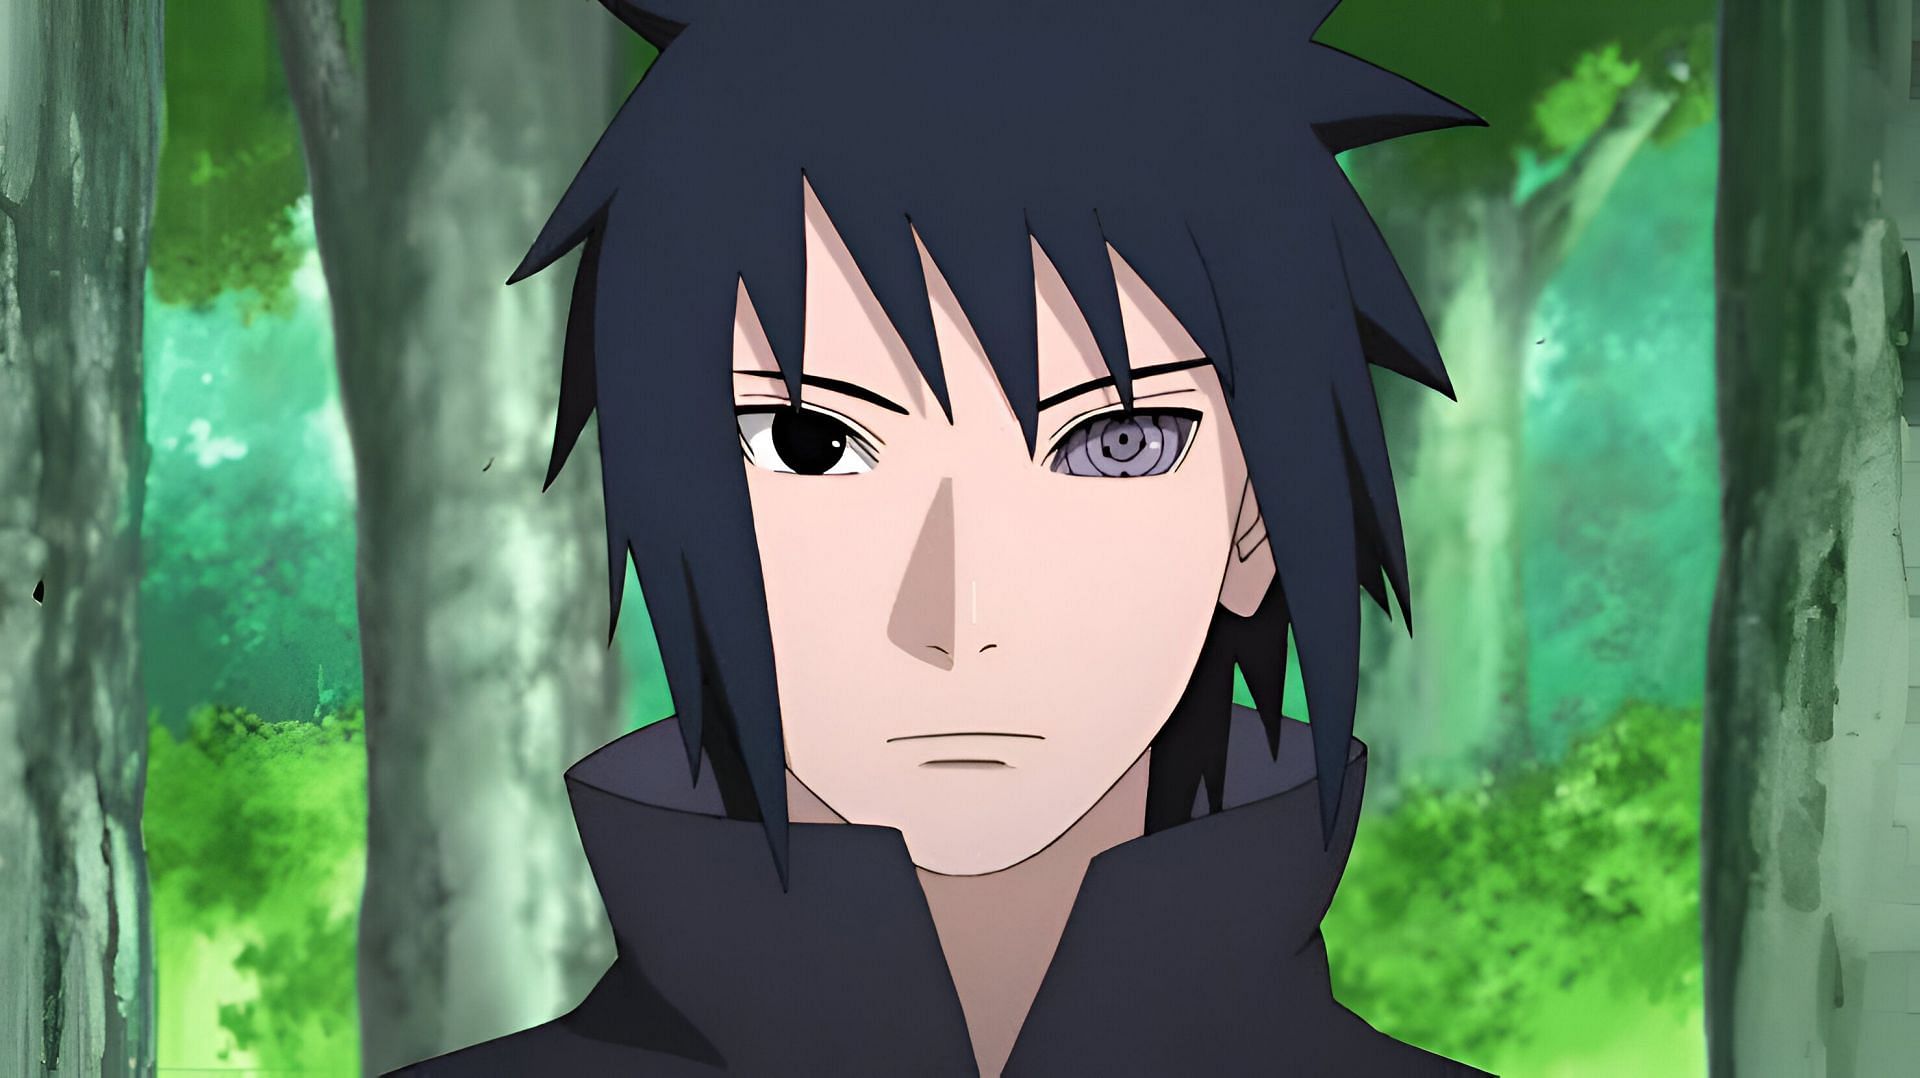 Sasuke Uchiha as seen in the anime (Image via Studio Pierrot)